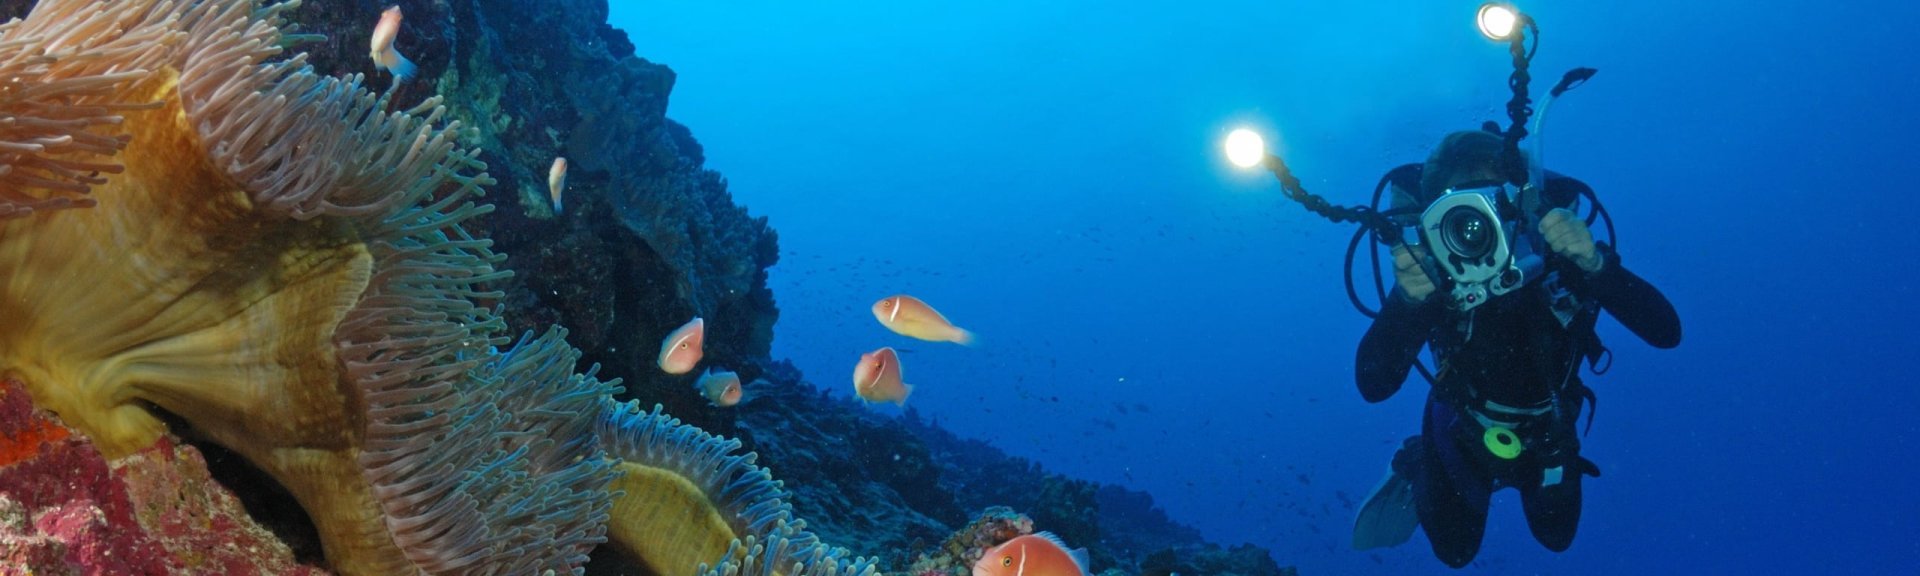 Diving the reefs. Photo: Justin Gilligan / Christmas Island Tourism Association